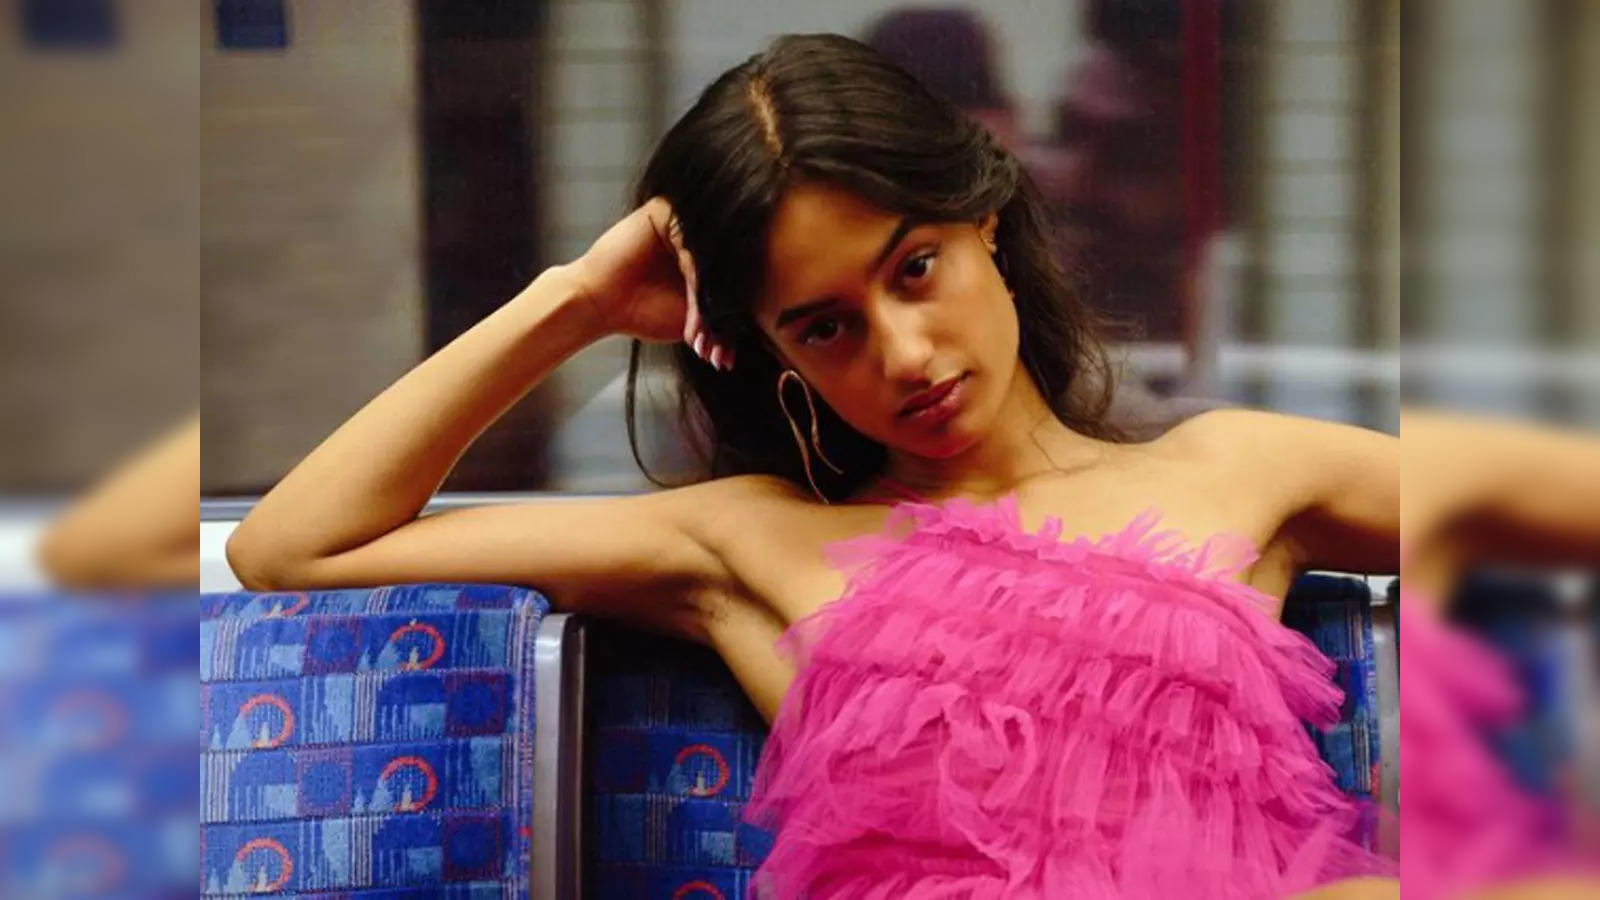 Tube Girl: Meet London's 'Tube Girl' Sabrina Bahsoon, who is